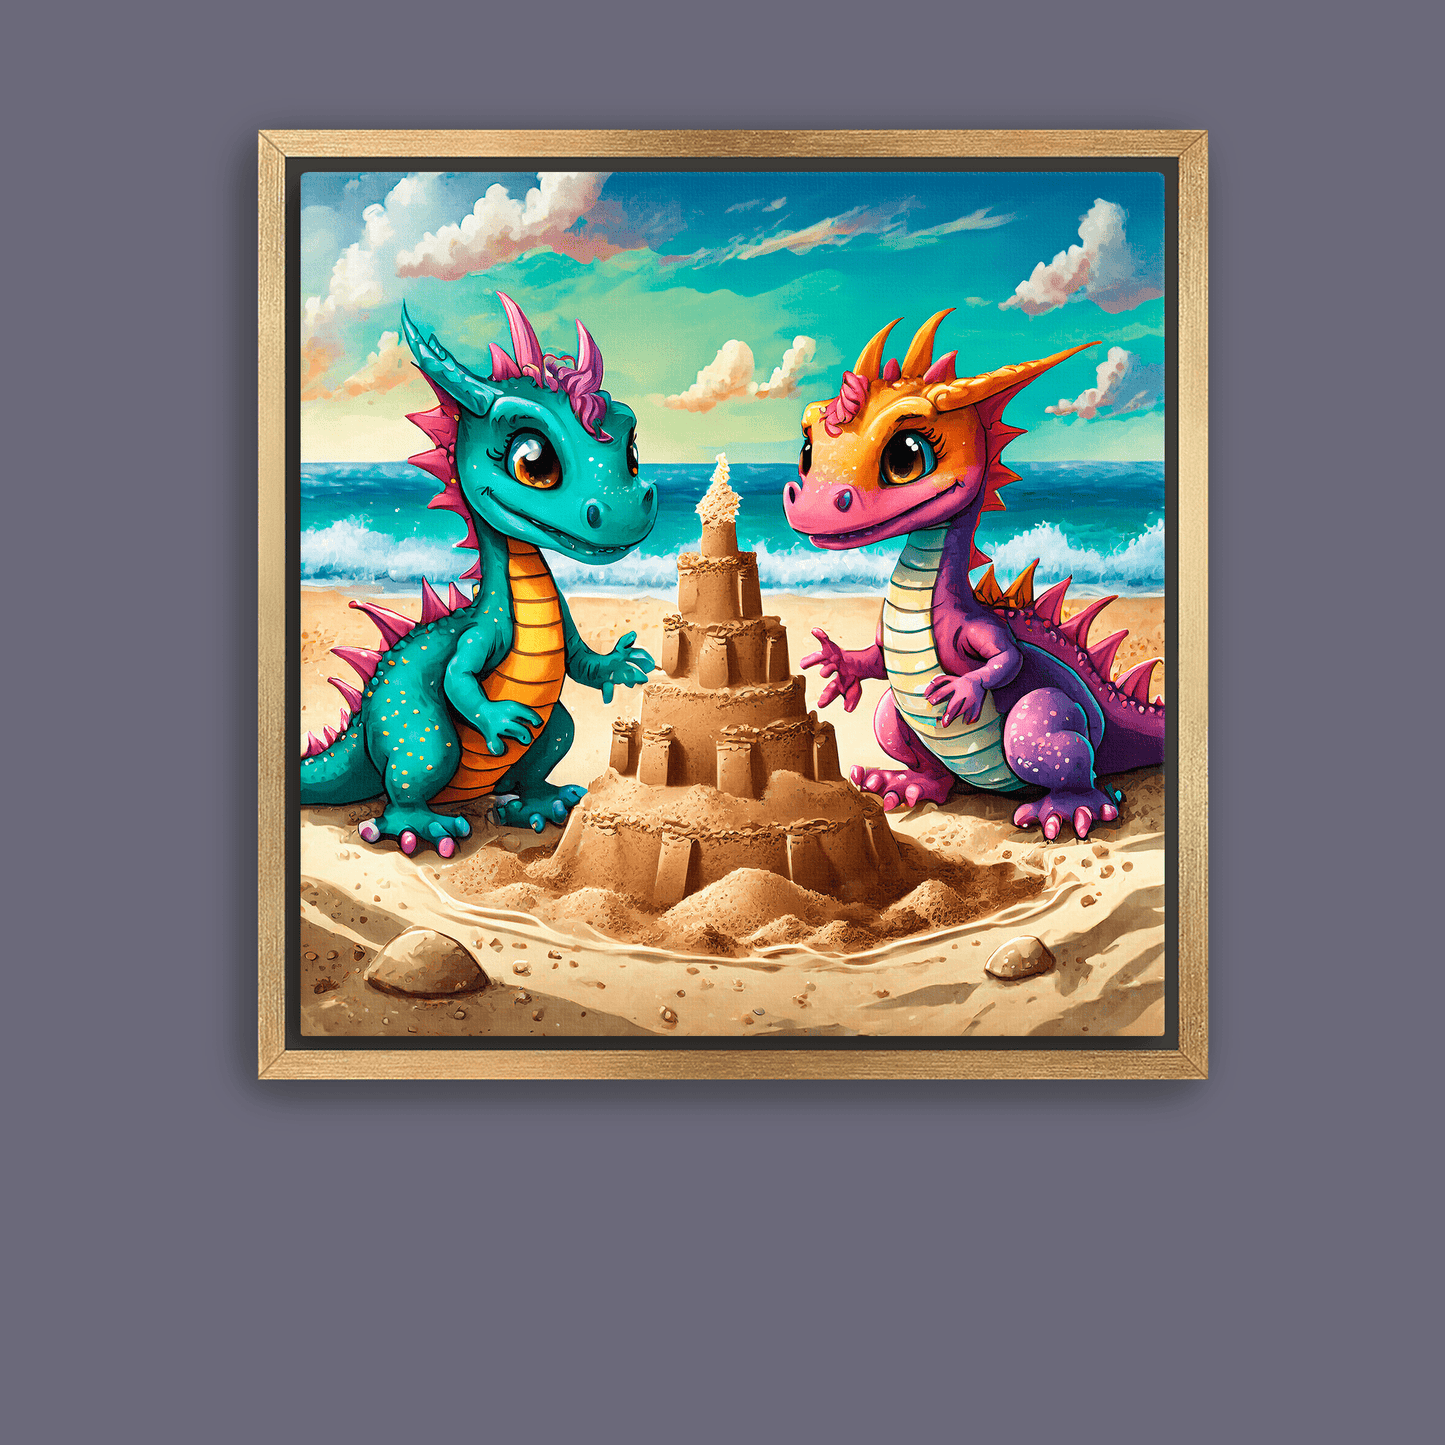 Baby Dragons at the Beach - Canvas Wrap - Premium Canvas Wrap